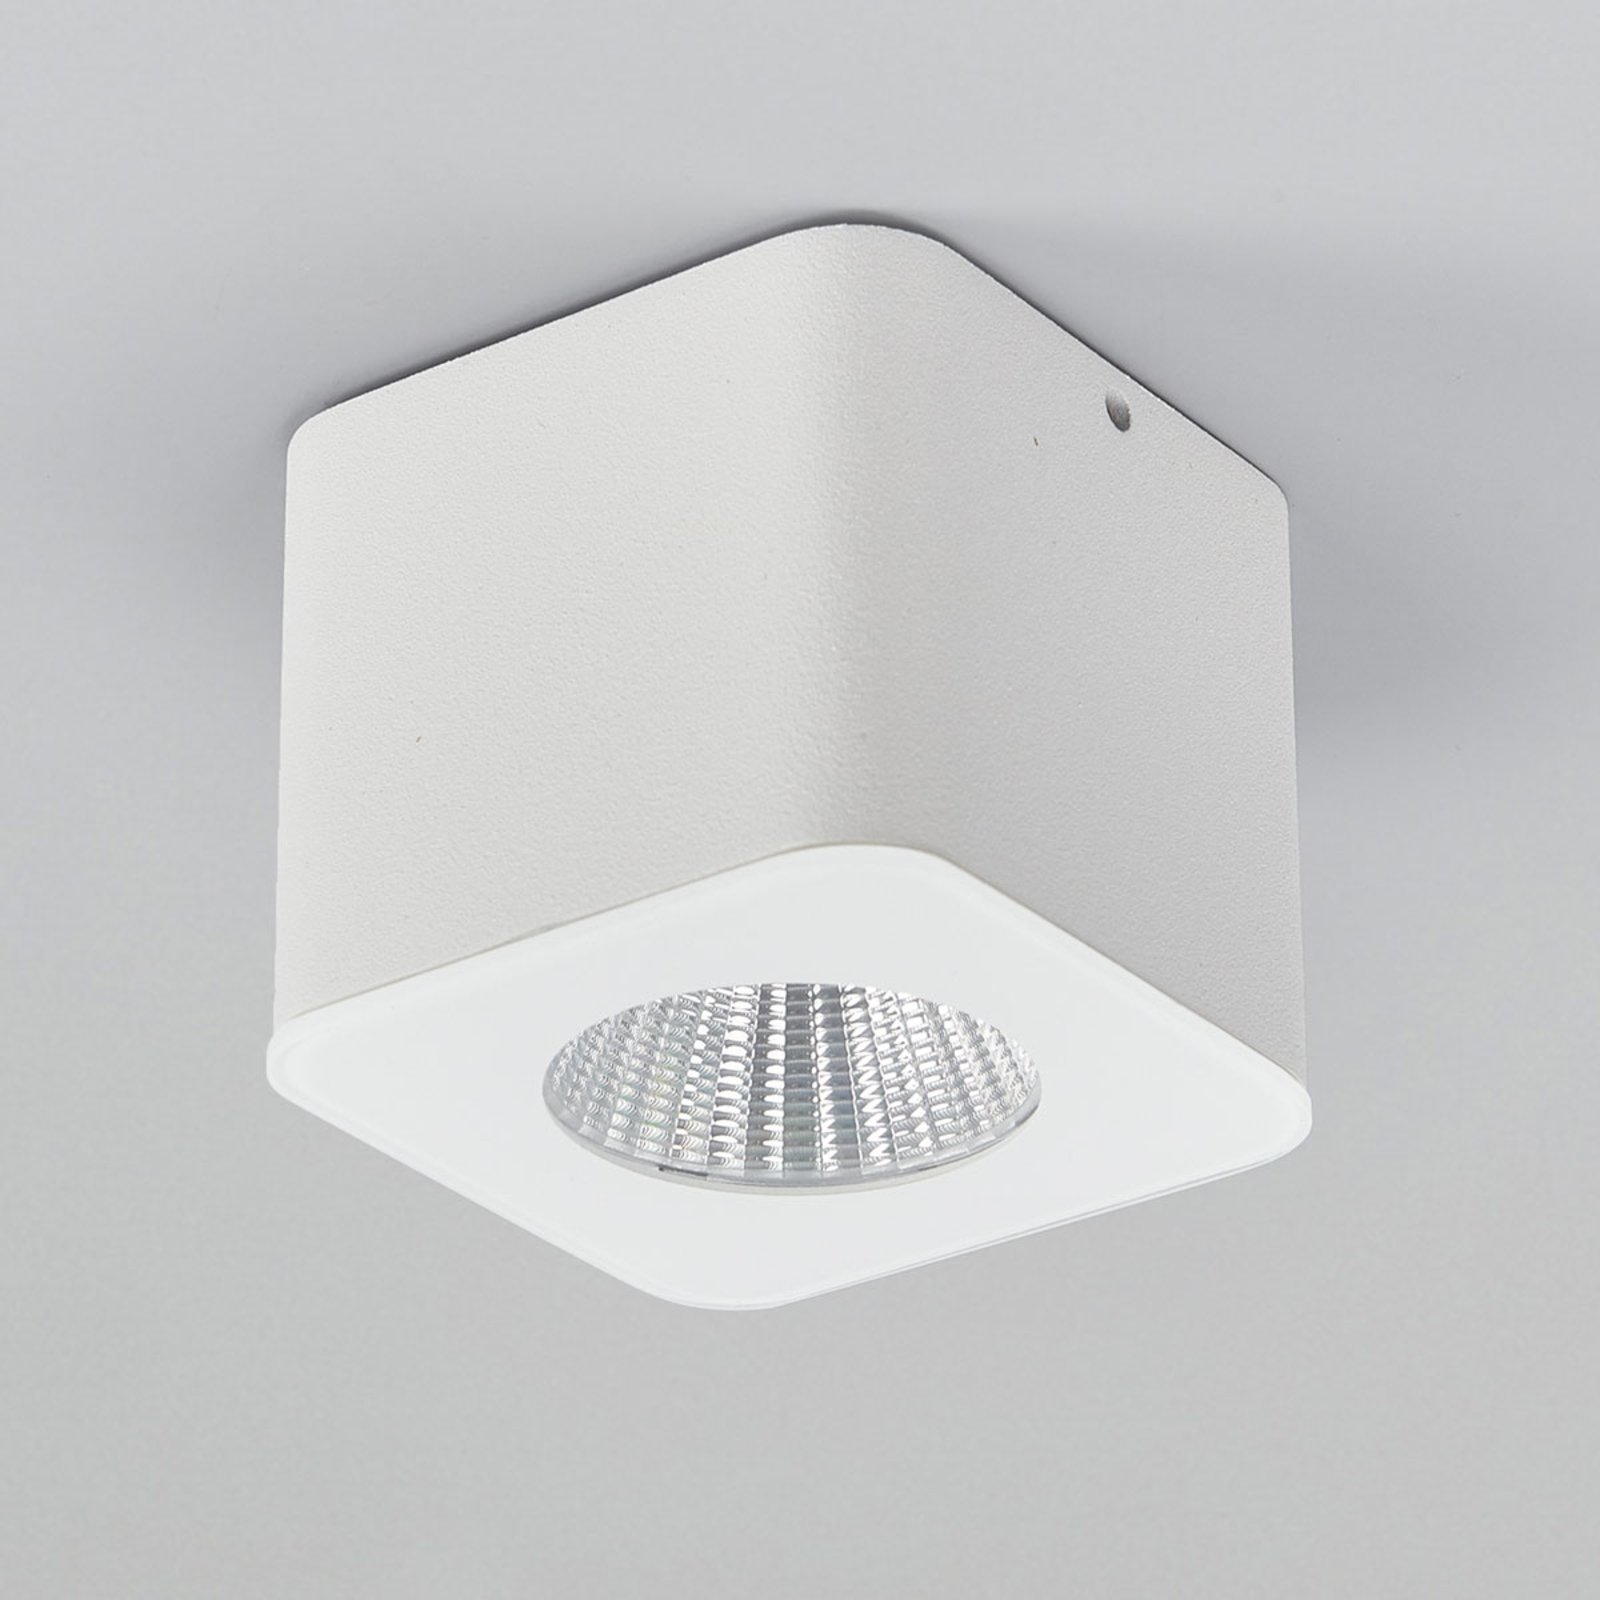 Helestra Oso spot plafond LED angulaire blanc mat